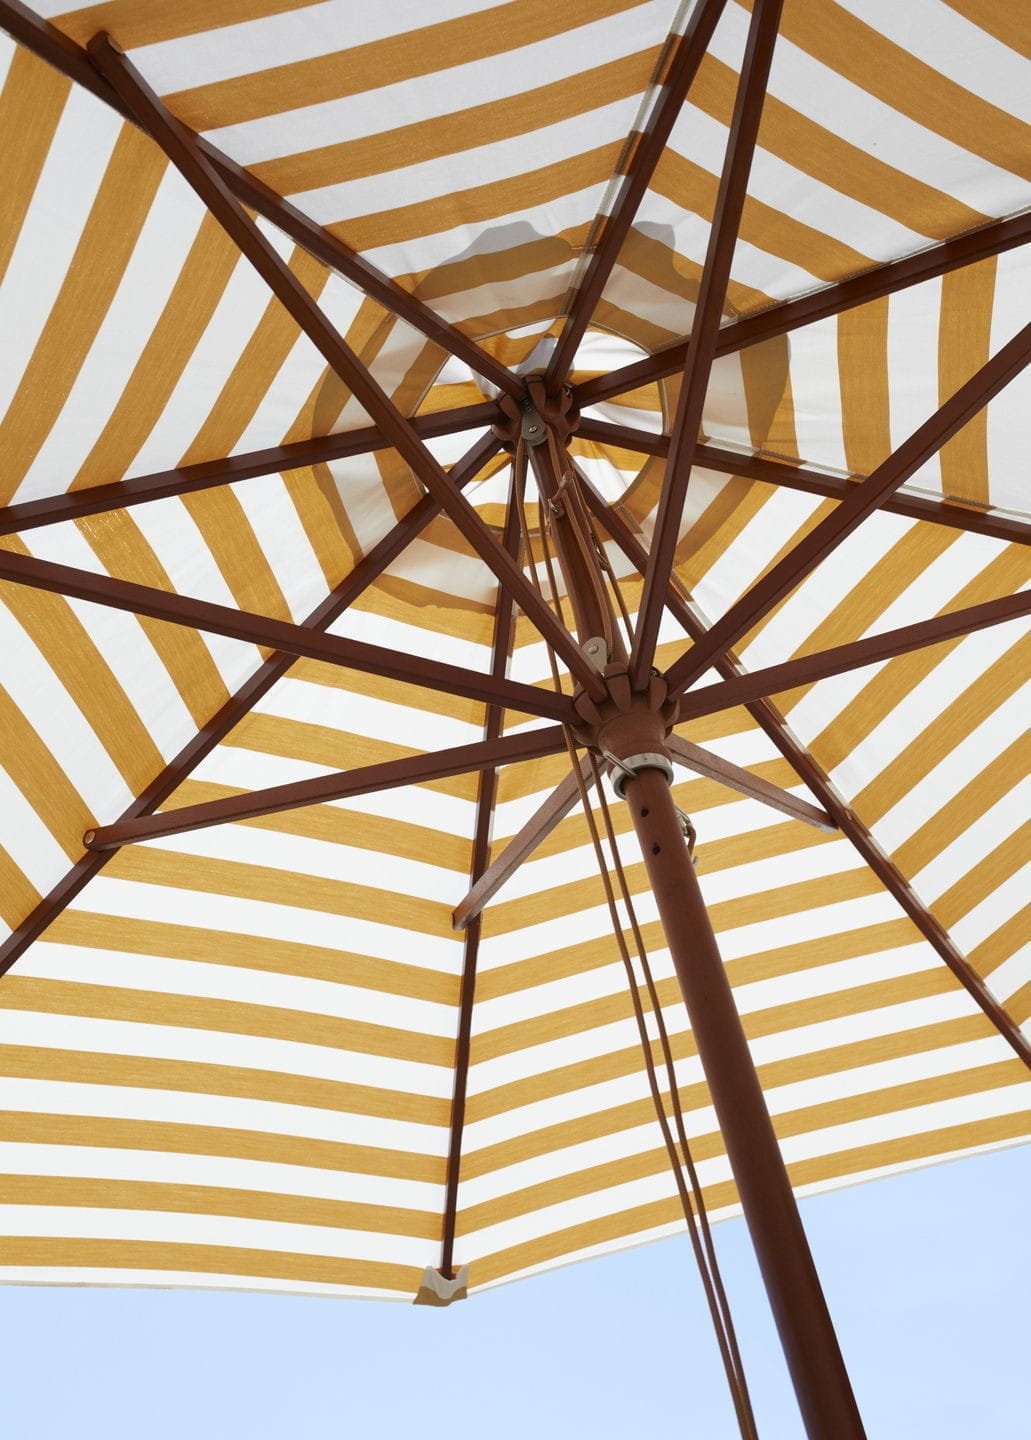 Skagerak Messina parasol Ø270 cm, gouden gele strepen